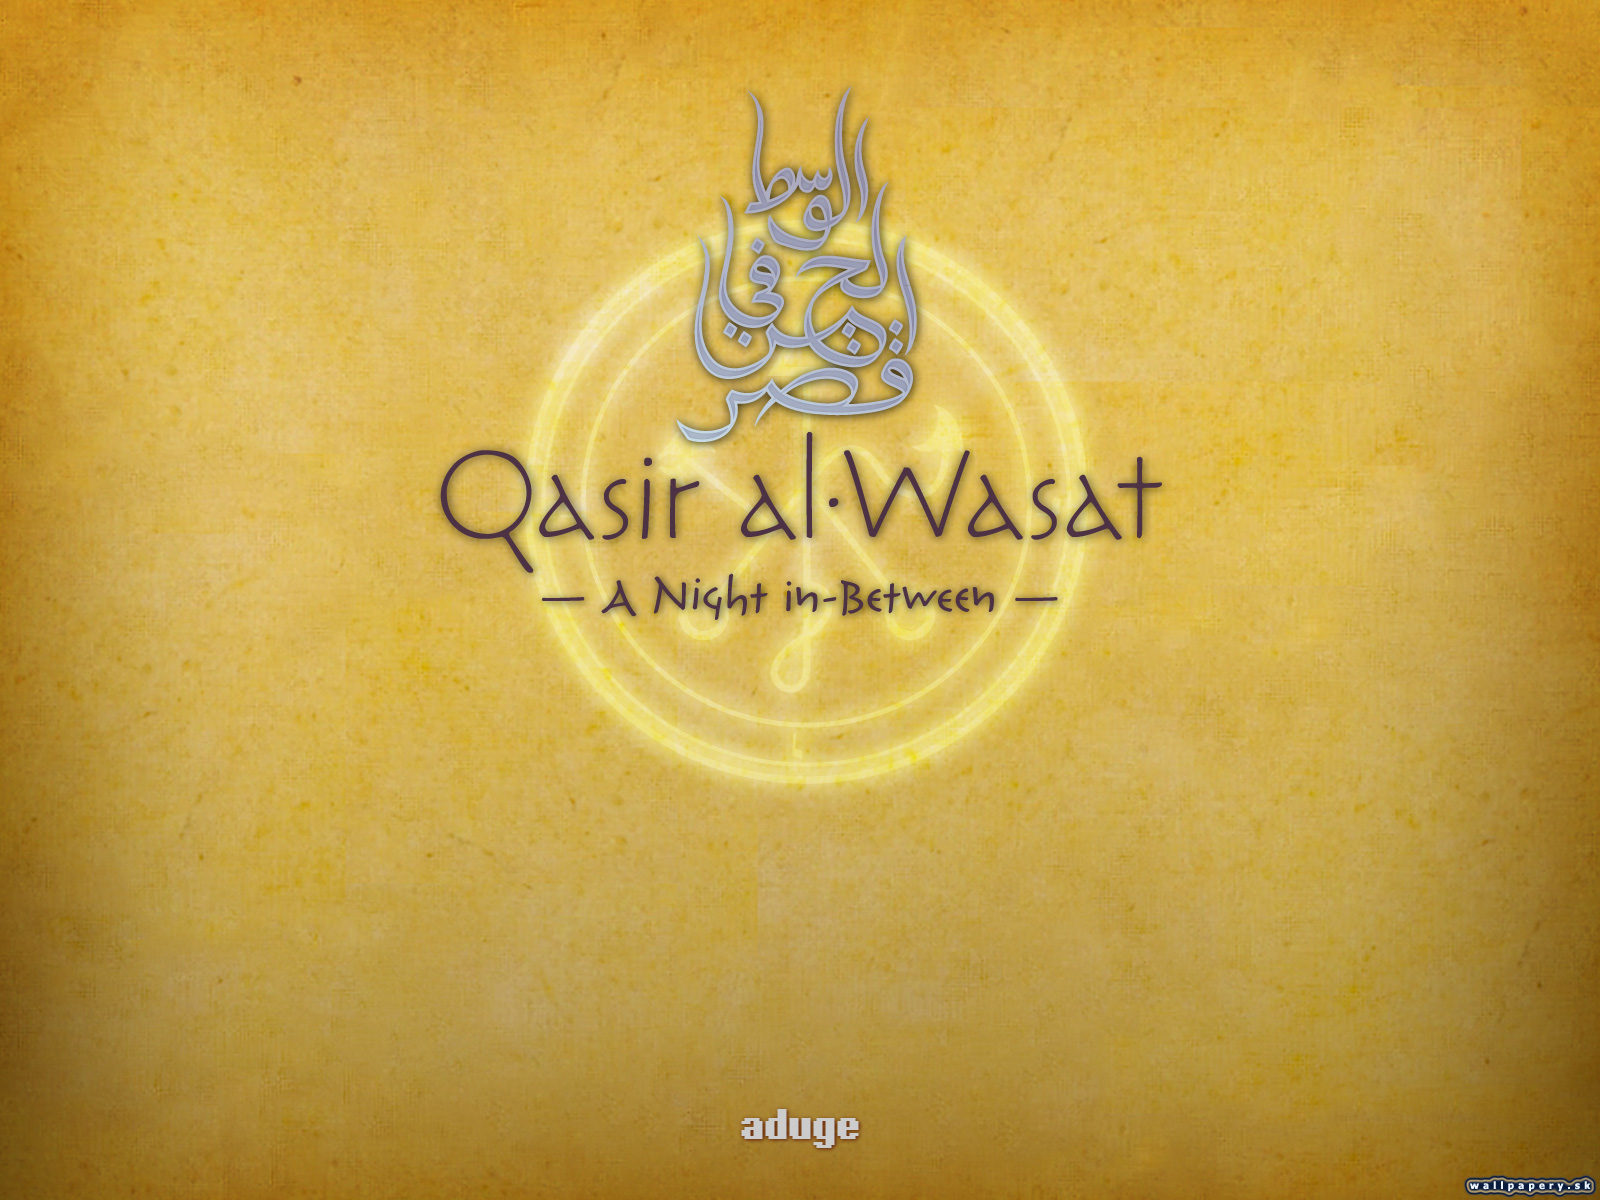 Qasir Al-Wasat: A Night in-Between - wallpaper 1